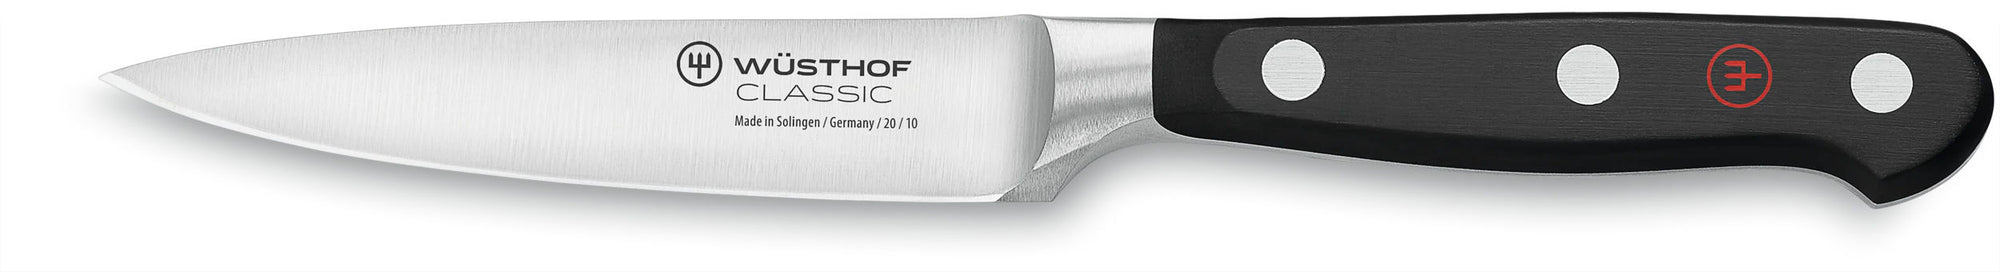 Wusthof Classic Paring Knife, 4-inch (10 cm) - 4066-10